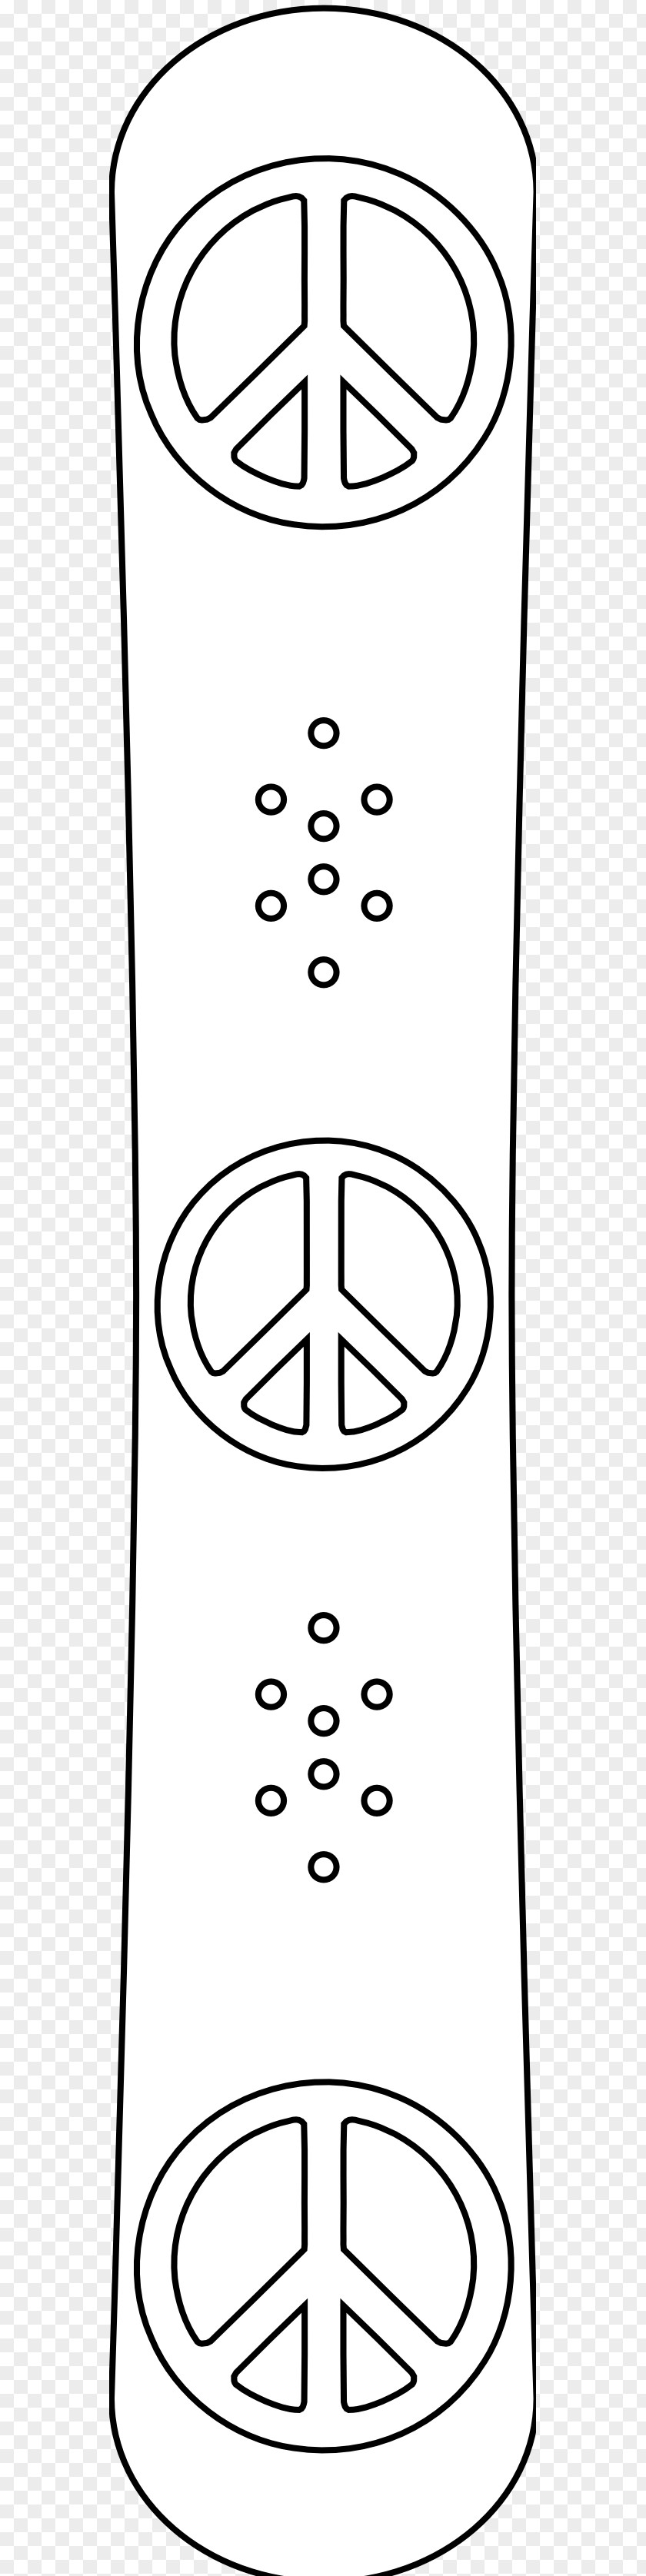 Peace Symbol Drawing /m/02csf Symbols Pattern PNG